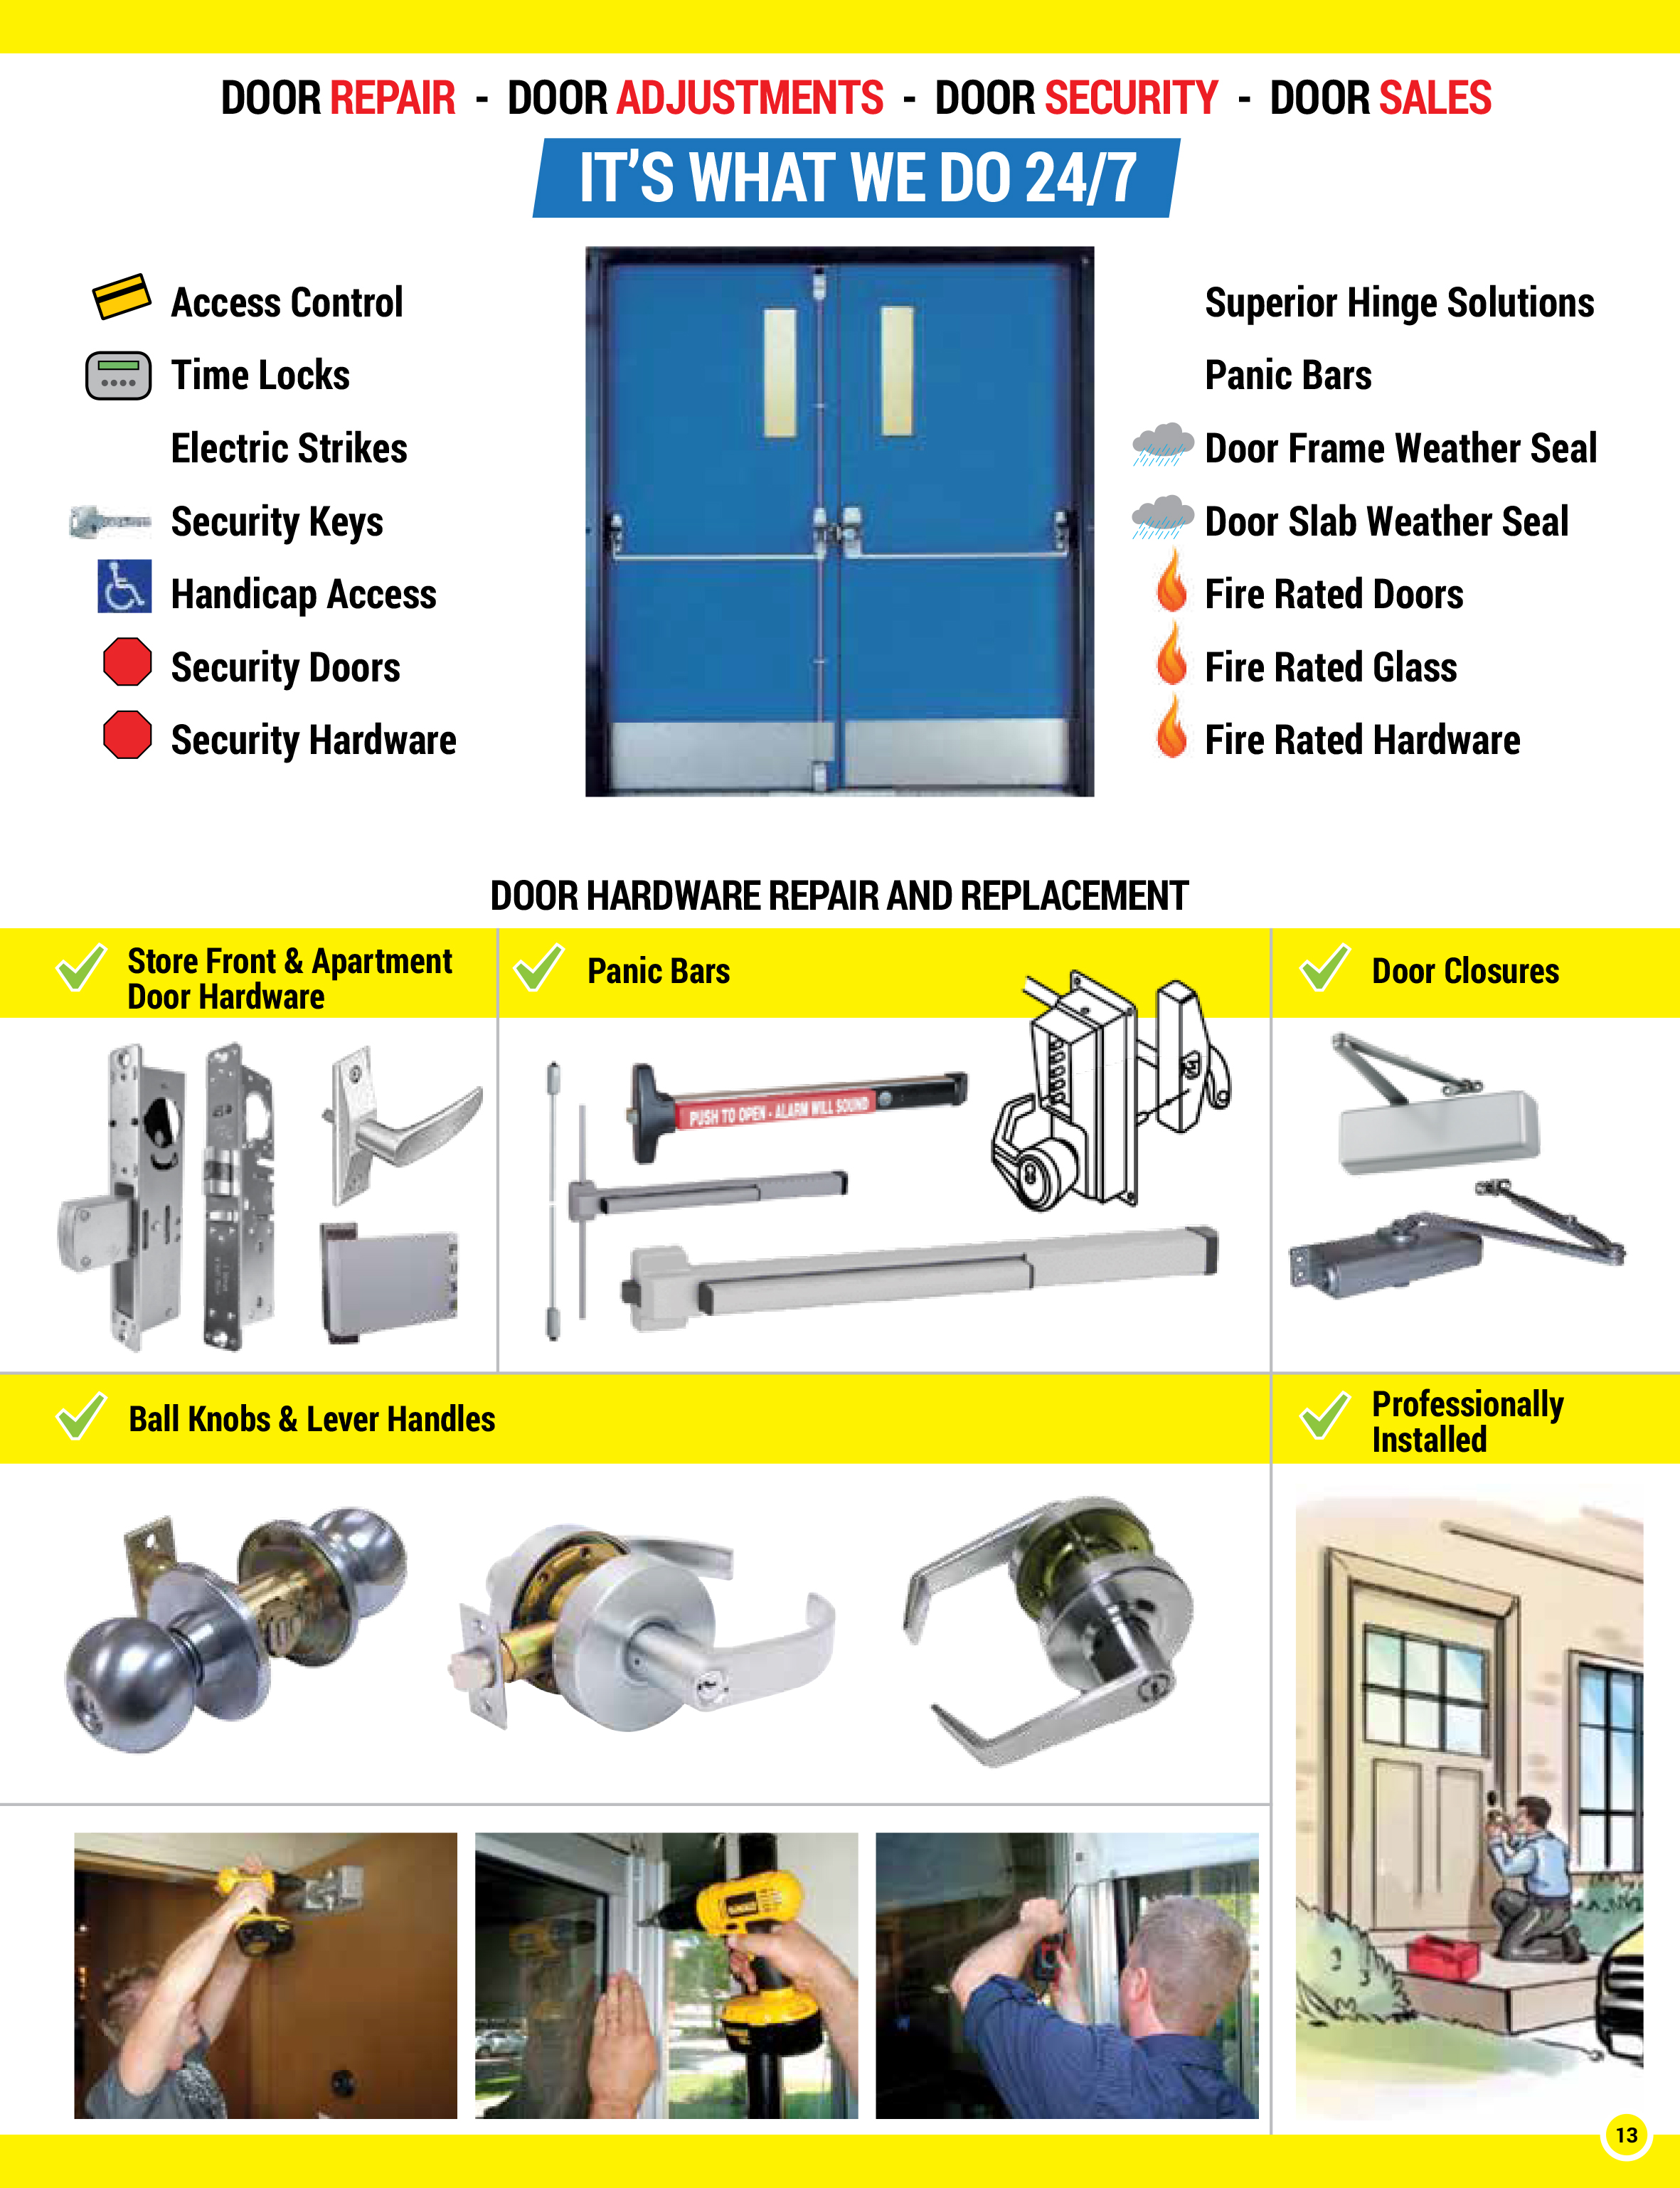 Door Surgeon repair service, adjustments, sales, security, access control, security keys, time locks